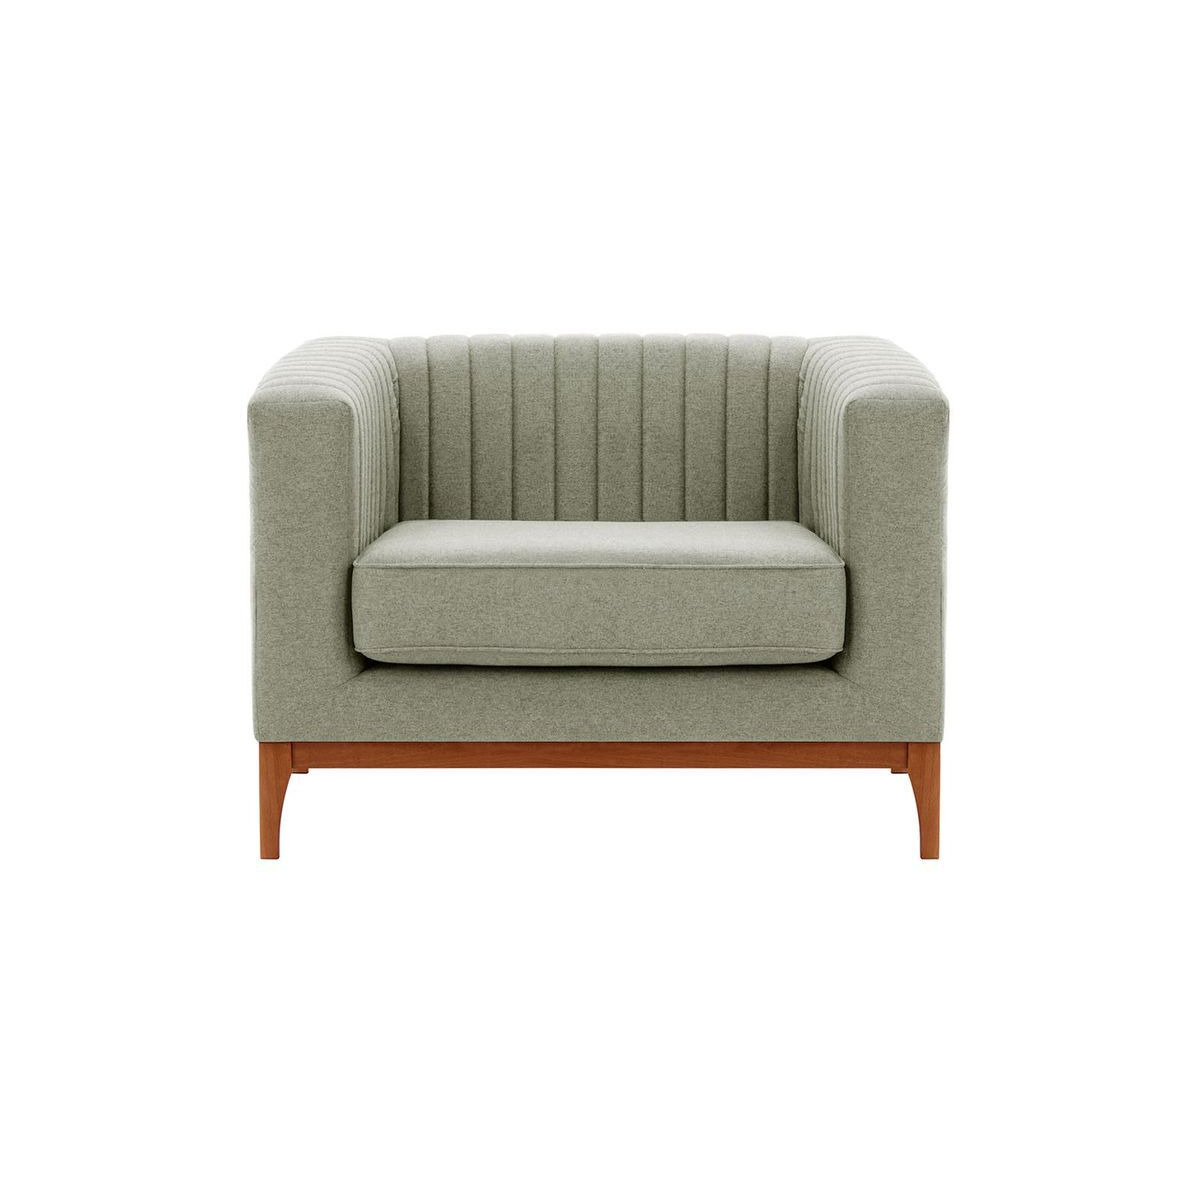 Slender Wood Armchair, grey, Leg colour: aveo - image 1